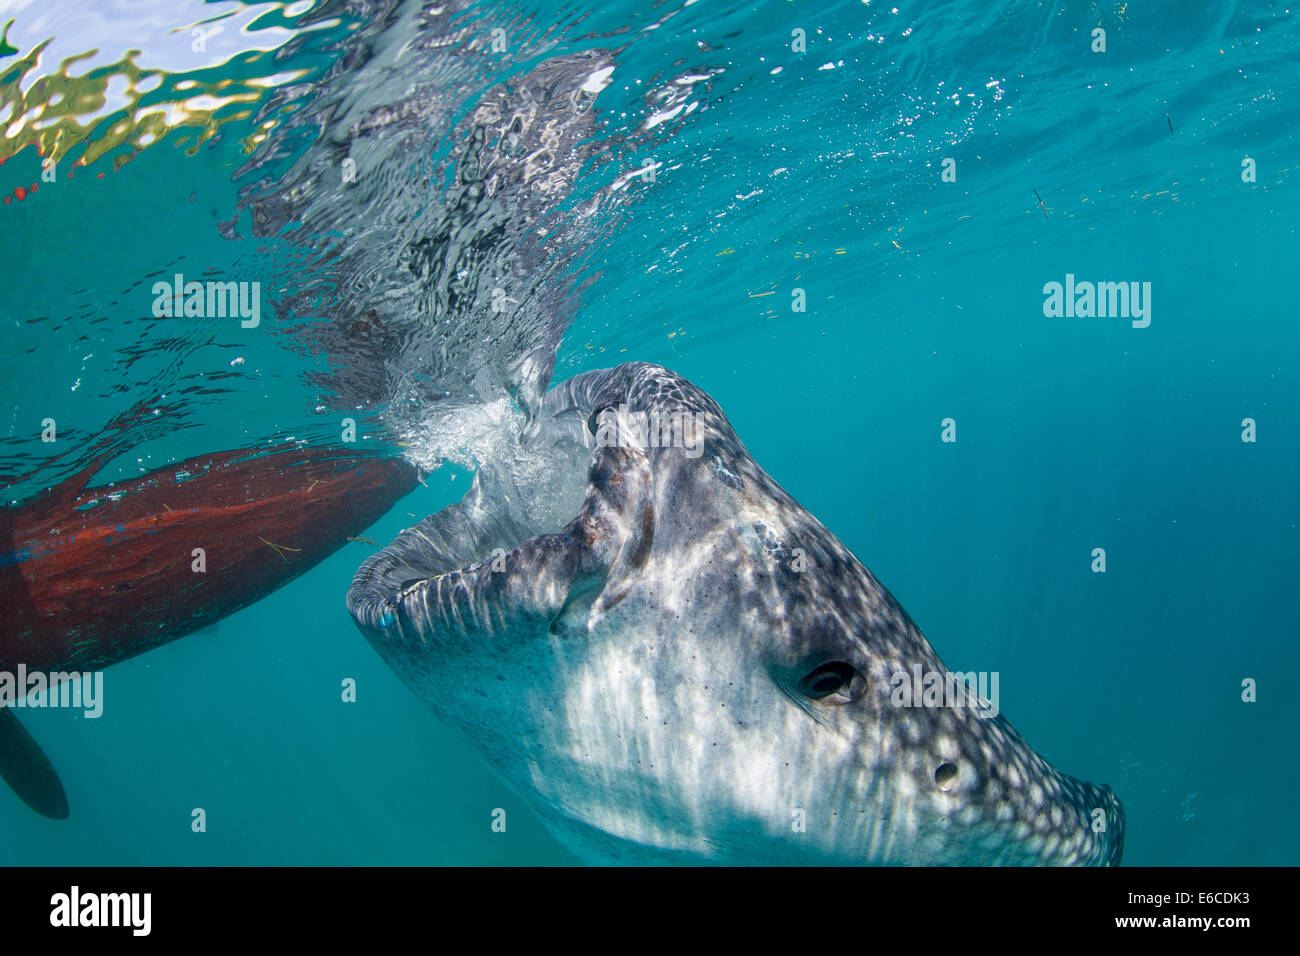 Whale shark snorkel encounter at village of Oslob, on the island of Cebu, Philippines. Stock Photo